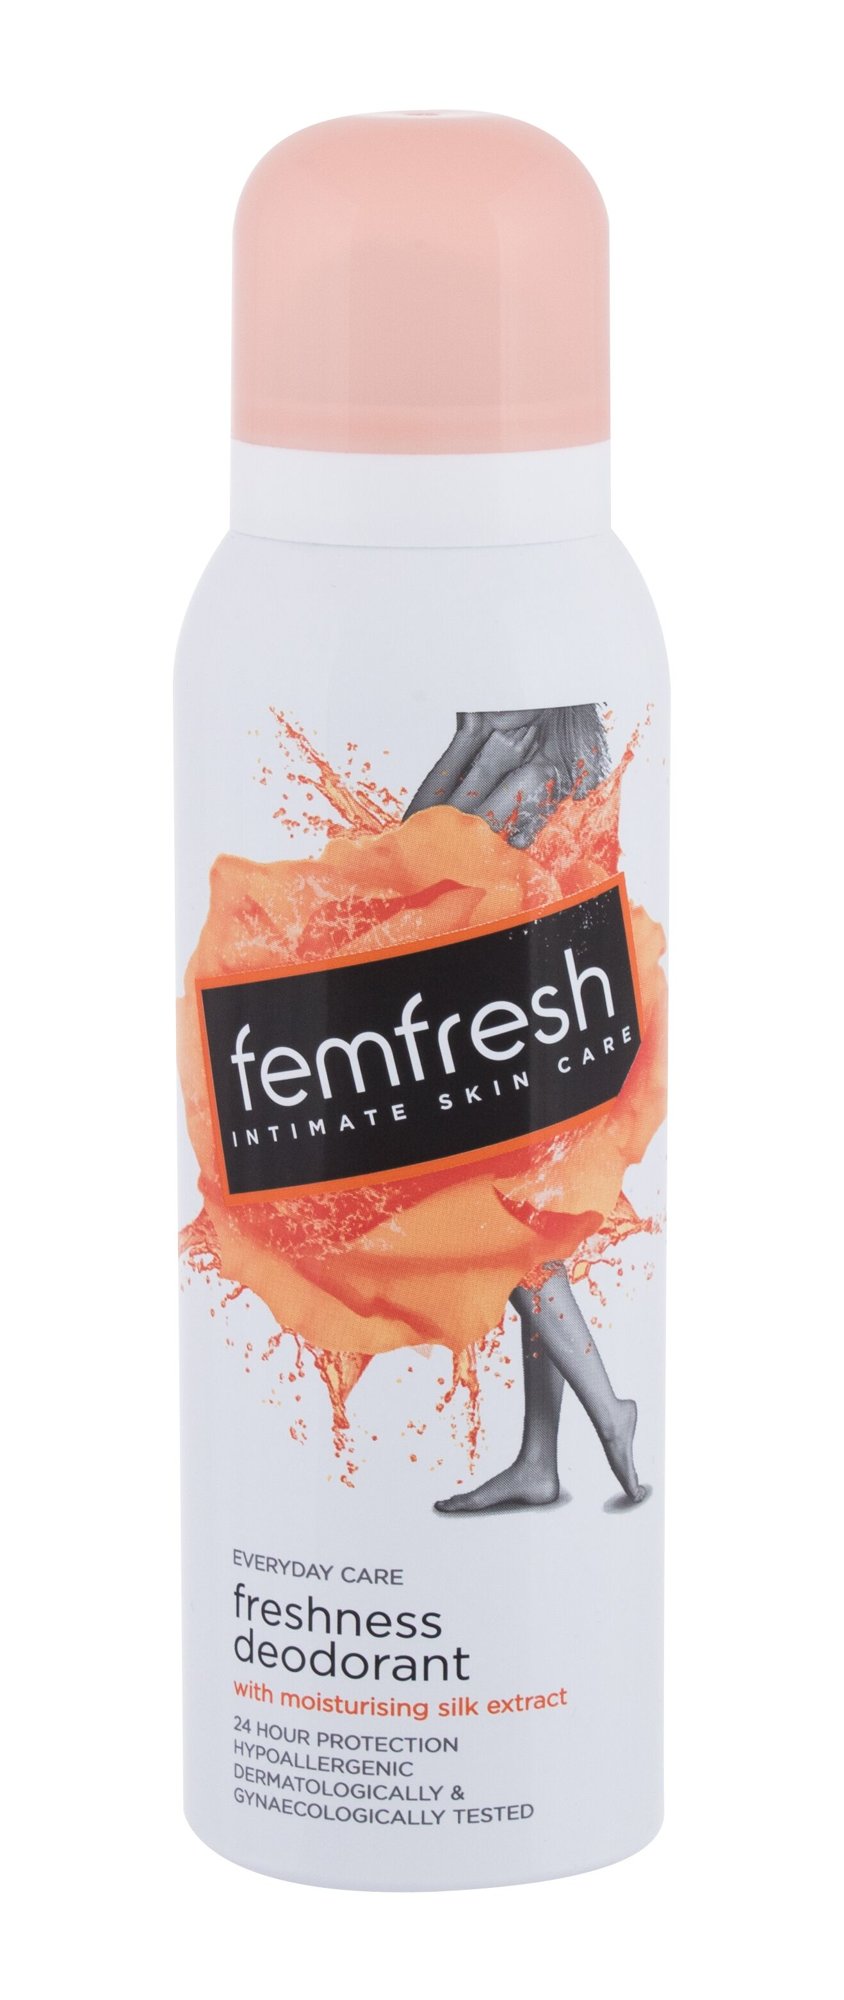 Femfresh Everyday Care Freshness intymios higienos priežiūra